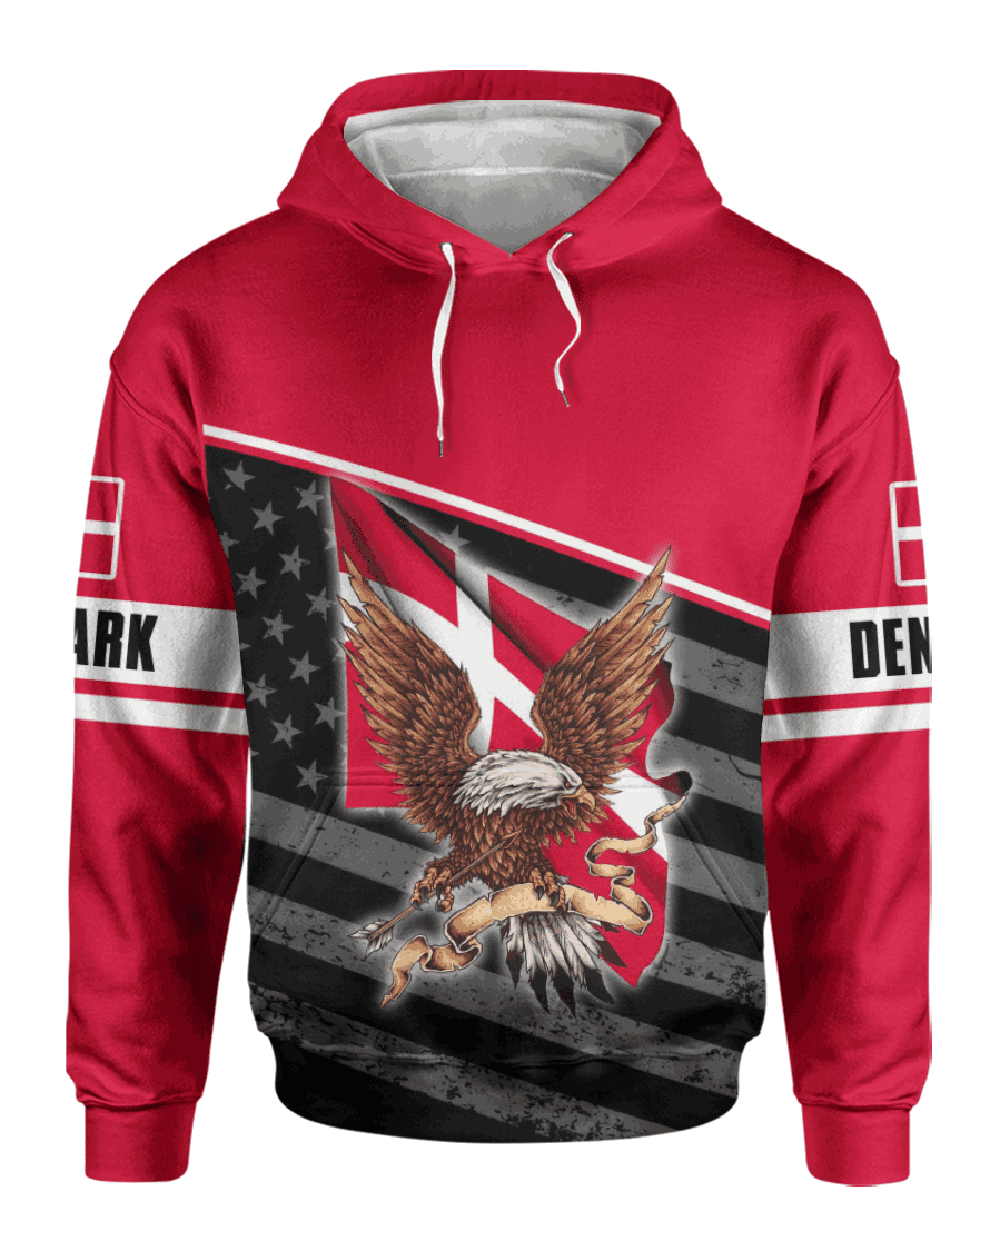 DENMARK US Eagle Flag 3D Hoodie, T-Shirt, Zip Hoodie, Sweatshirt For Men and Women